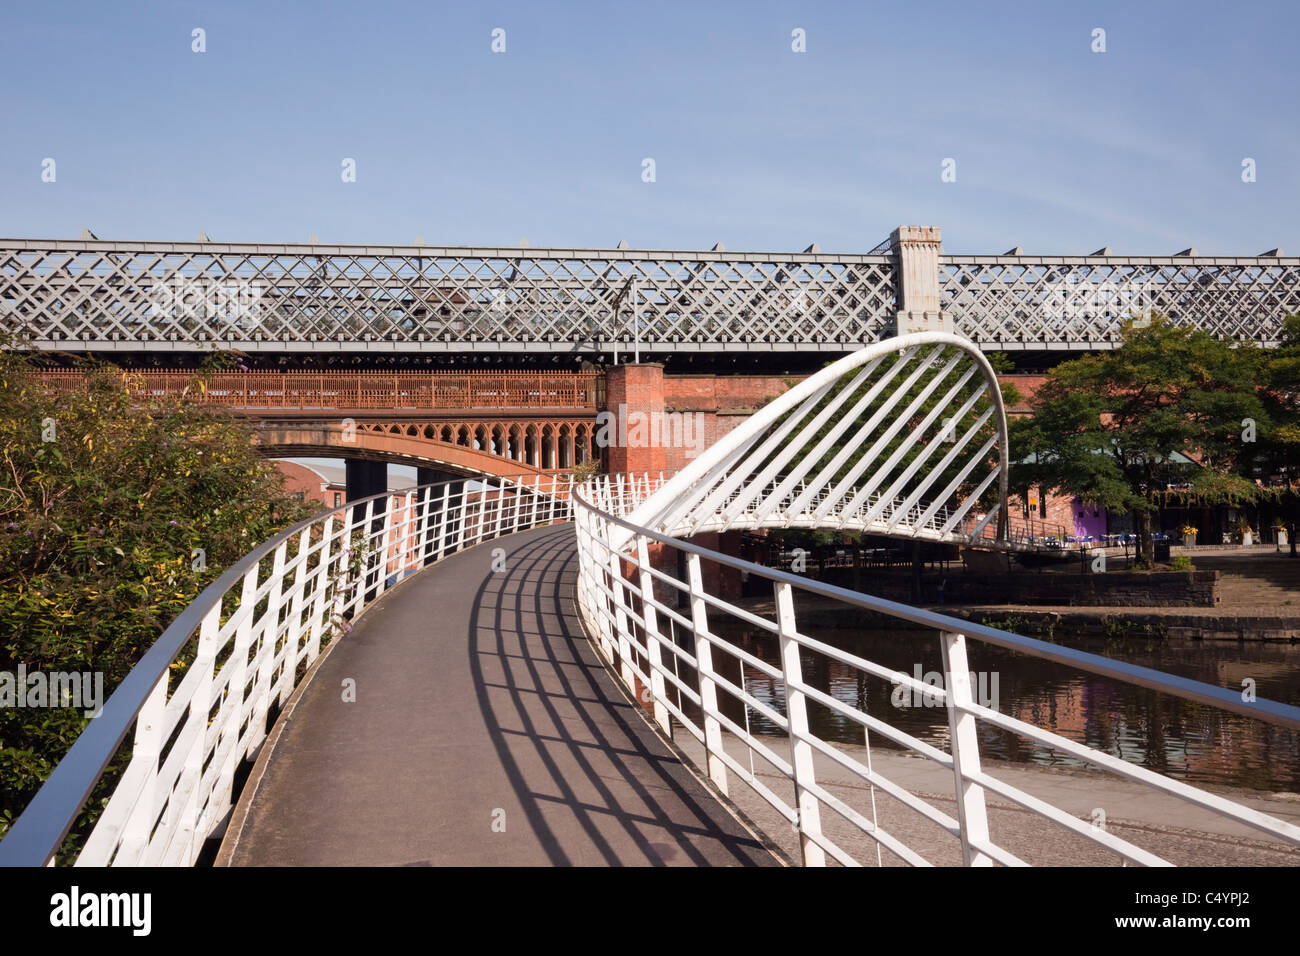 Castlefield Urban Heritage Park, Manchester, England, UK. Merchants Bridge footbridge across the Bridgewater Canal Stock Photo